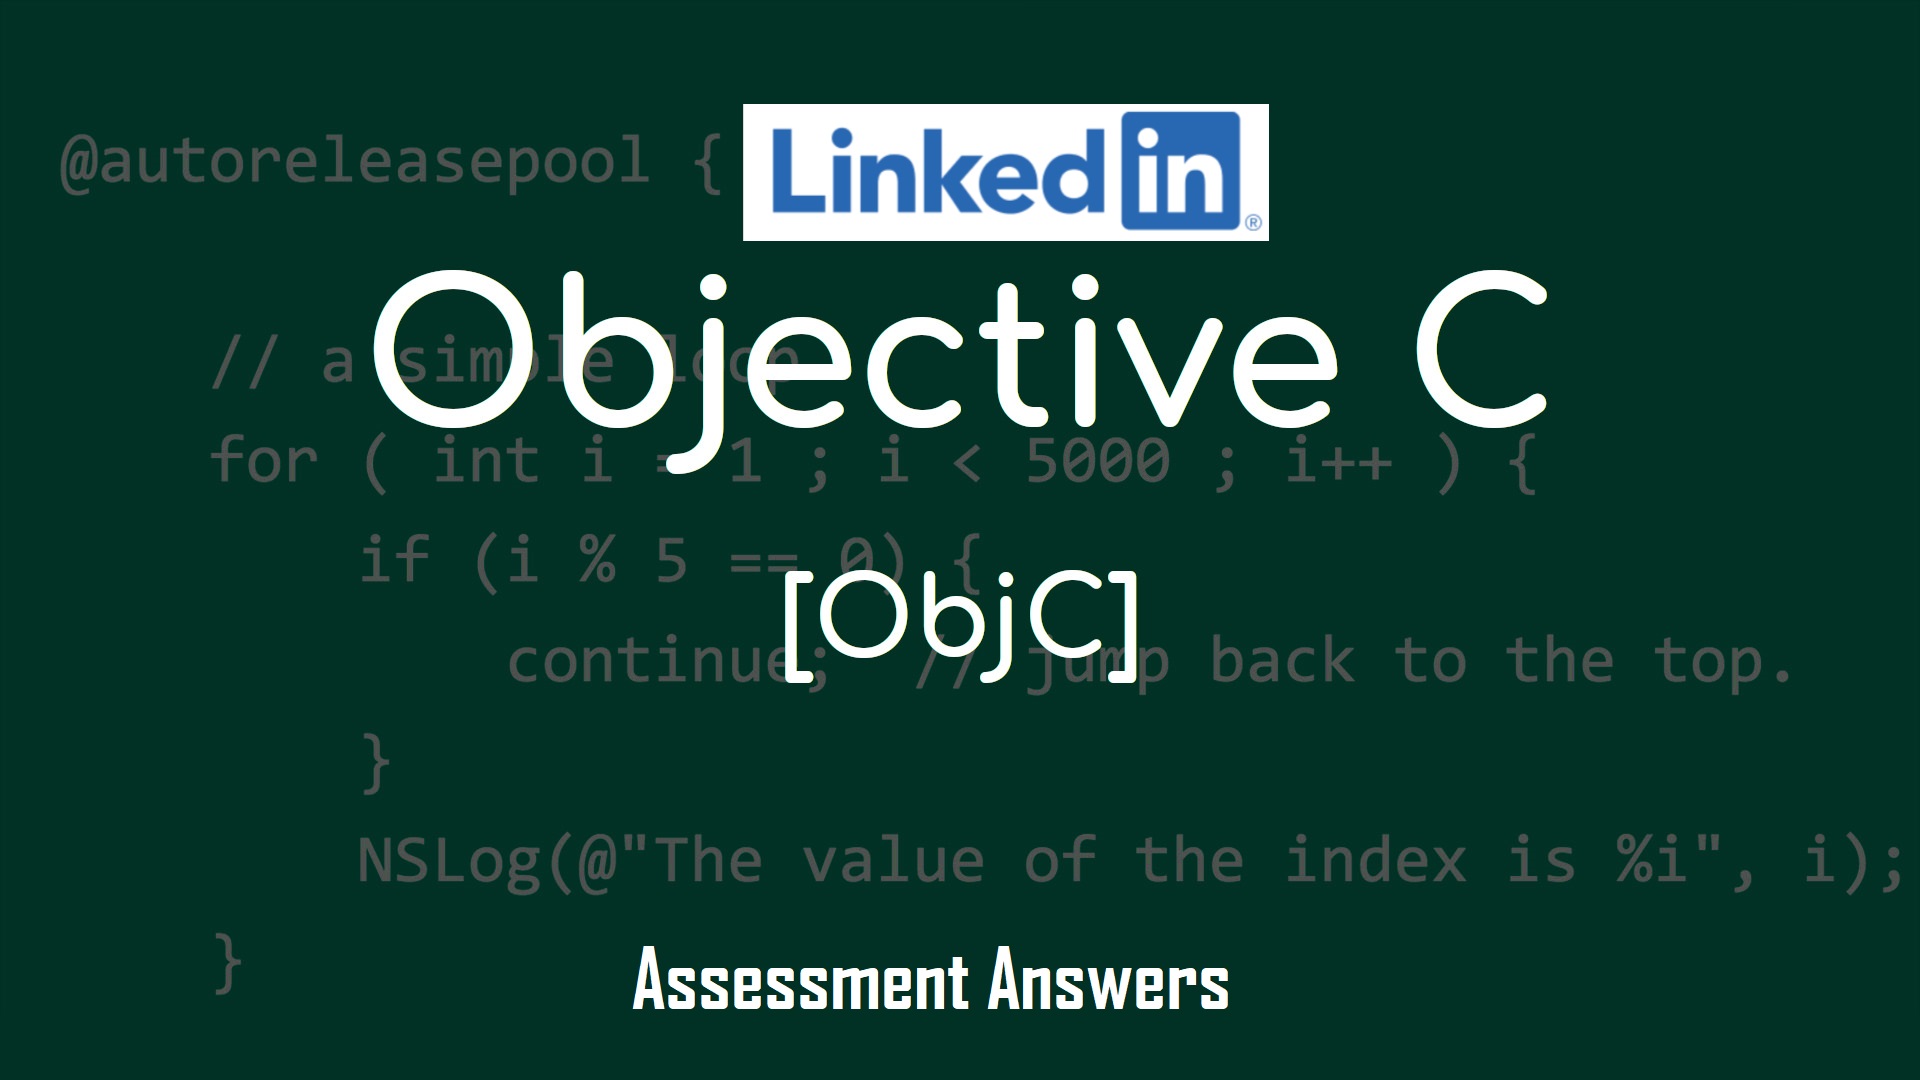 LinkedIn C Objective Assessment Answers